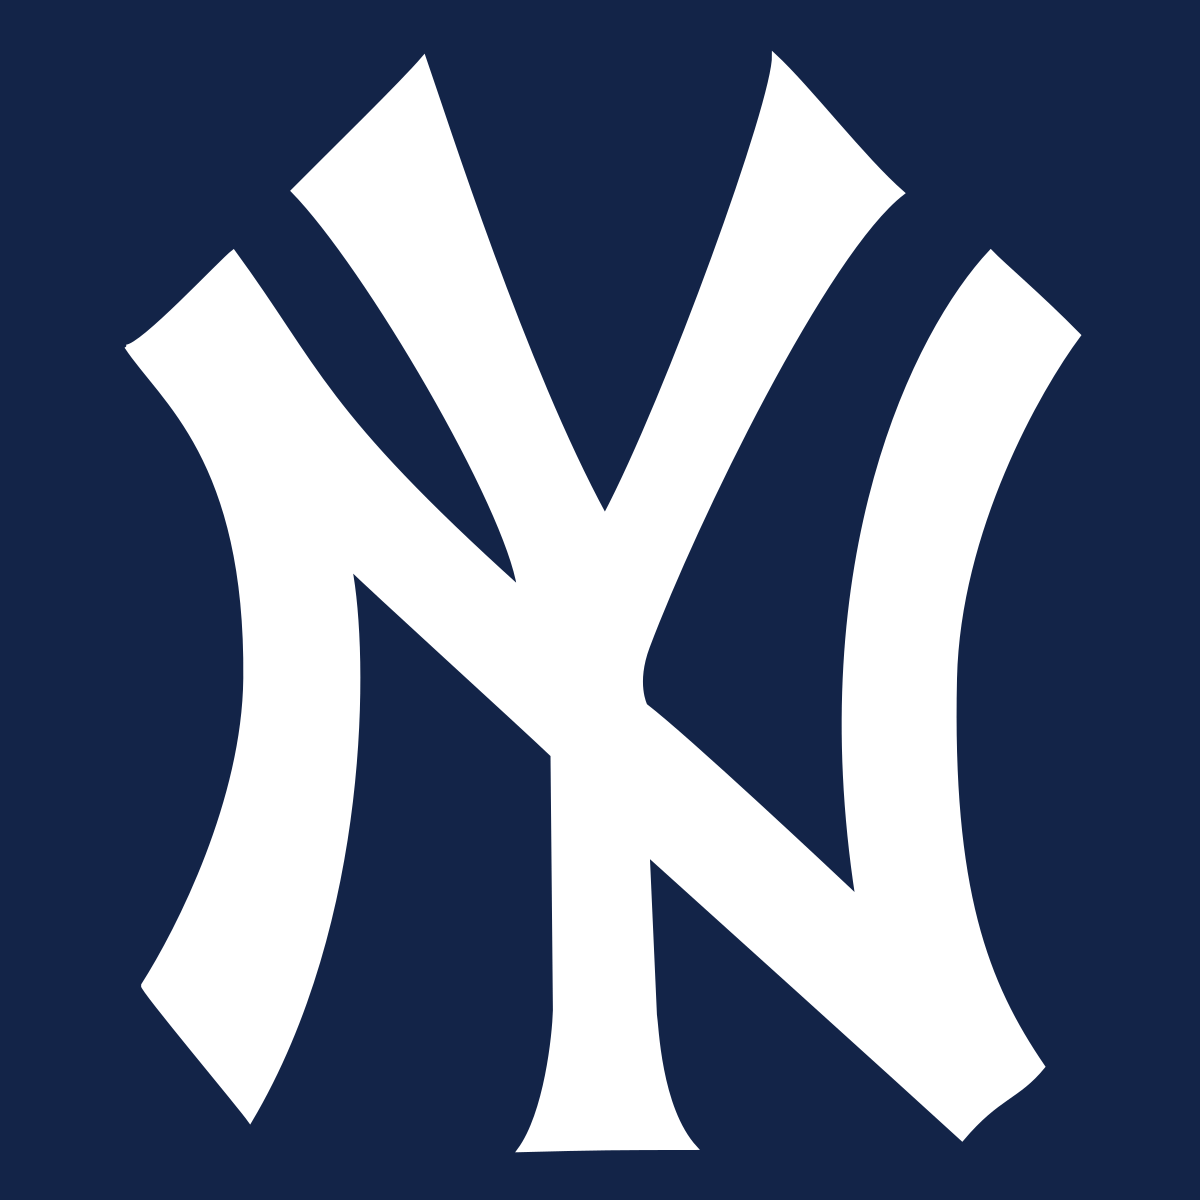 Old Yankees Logo - 2018 New York Yankees season